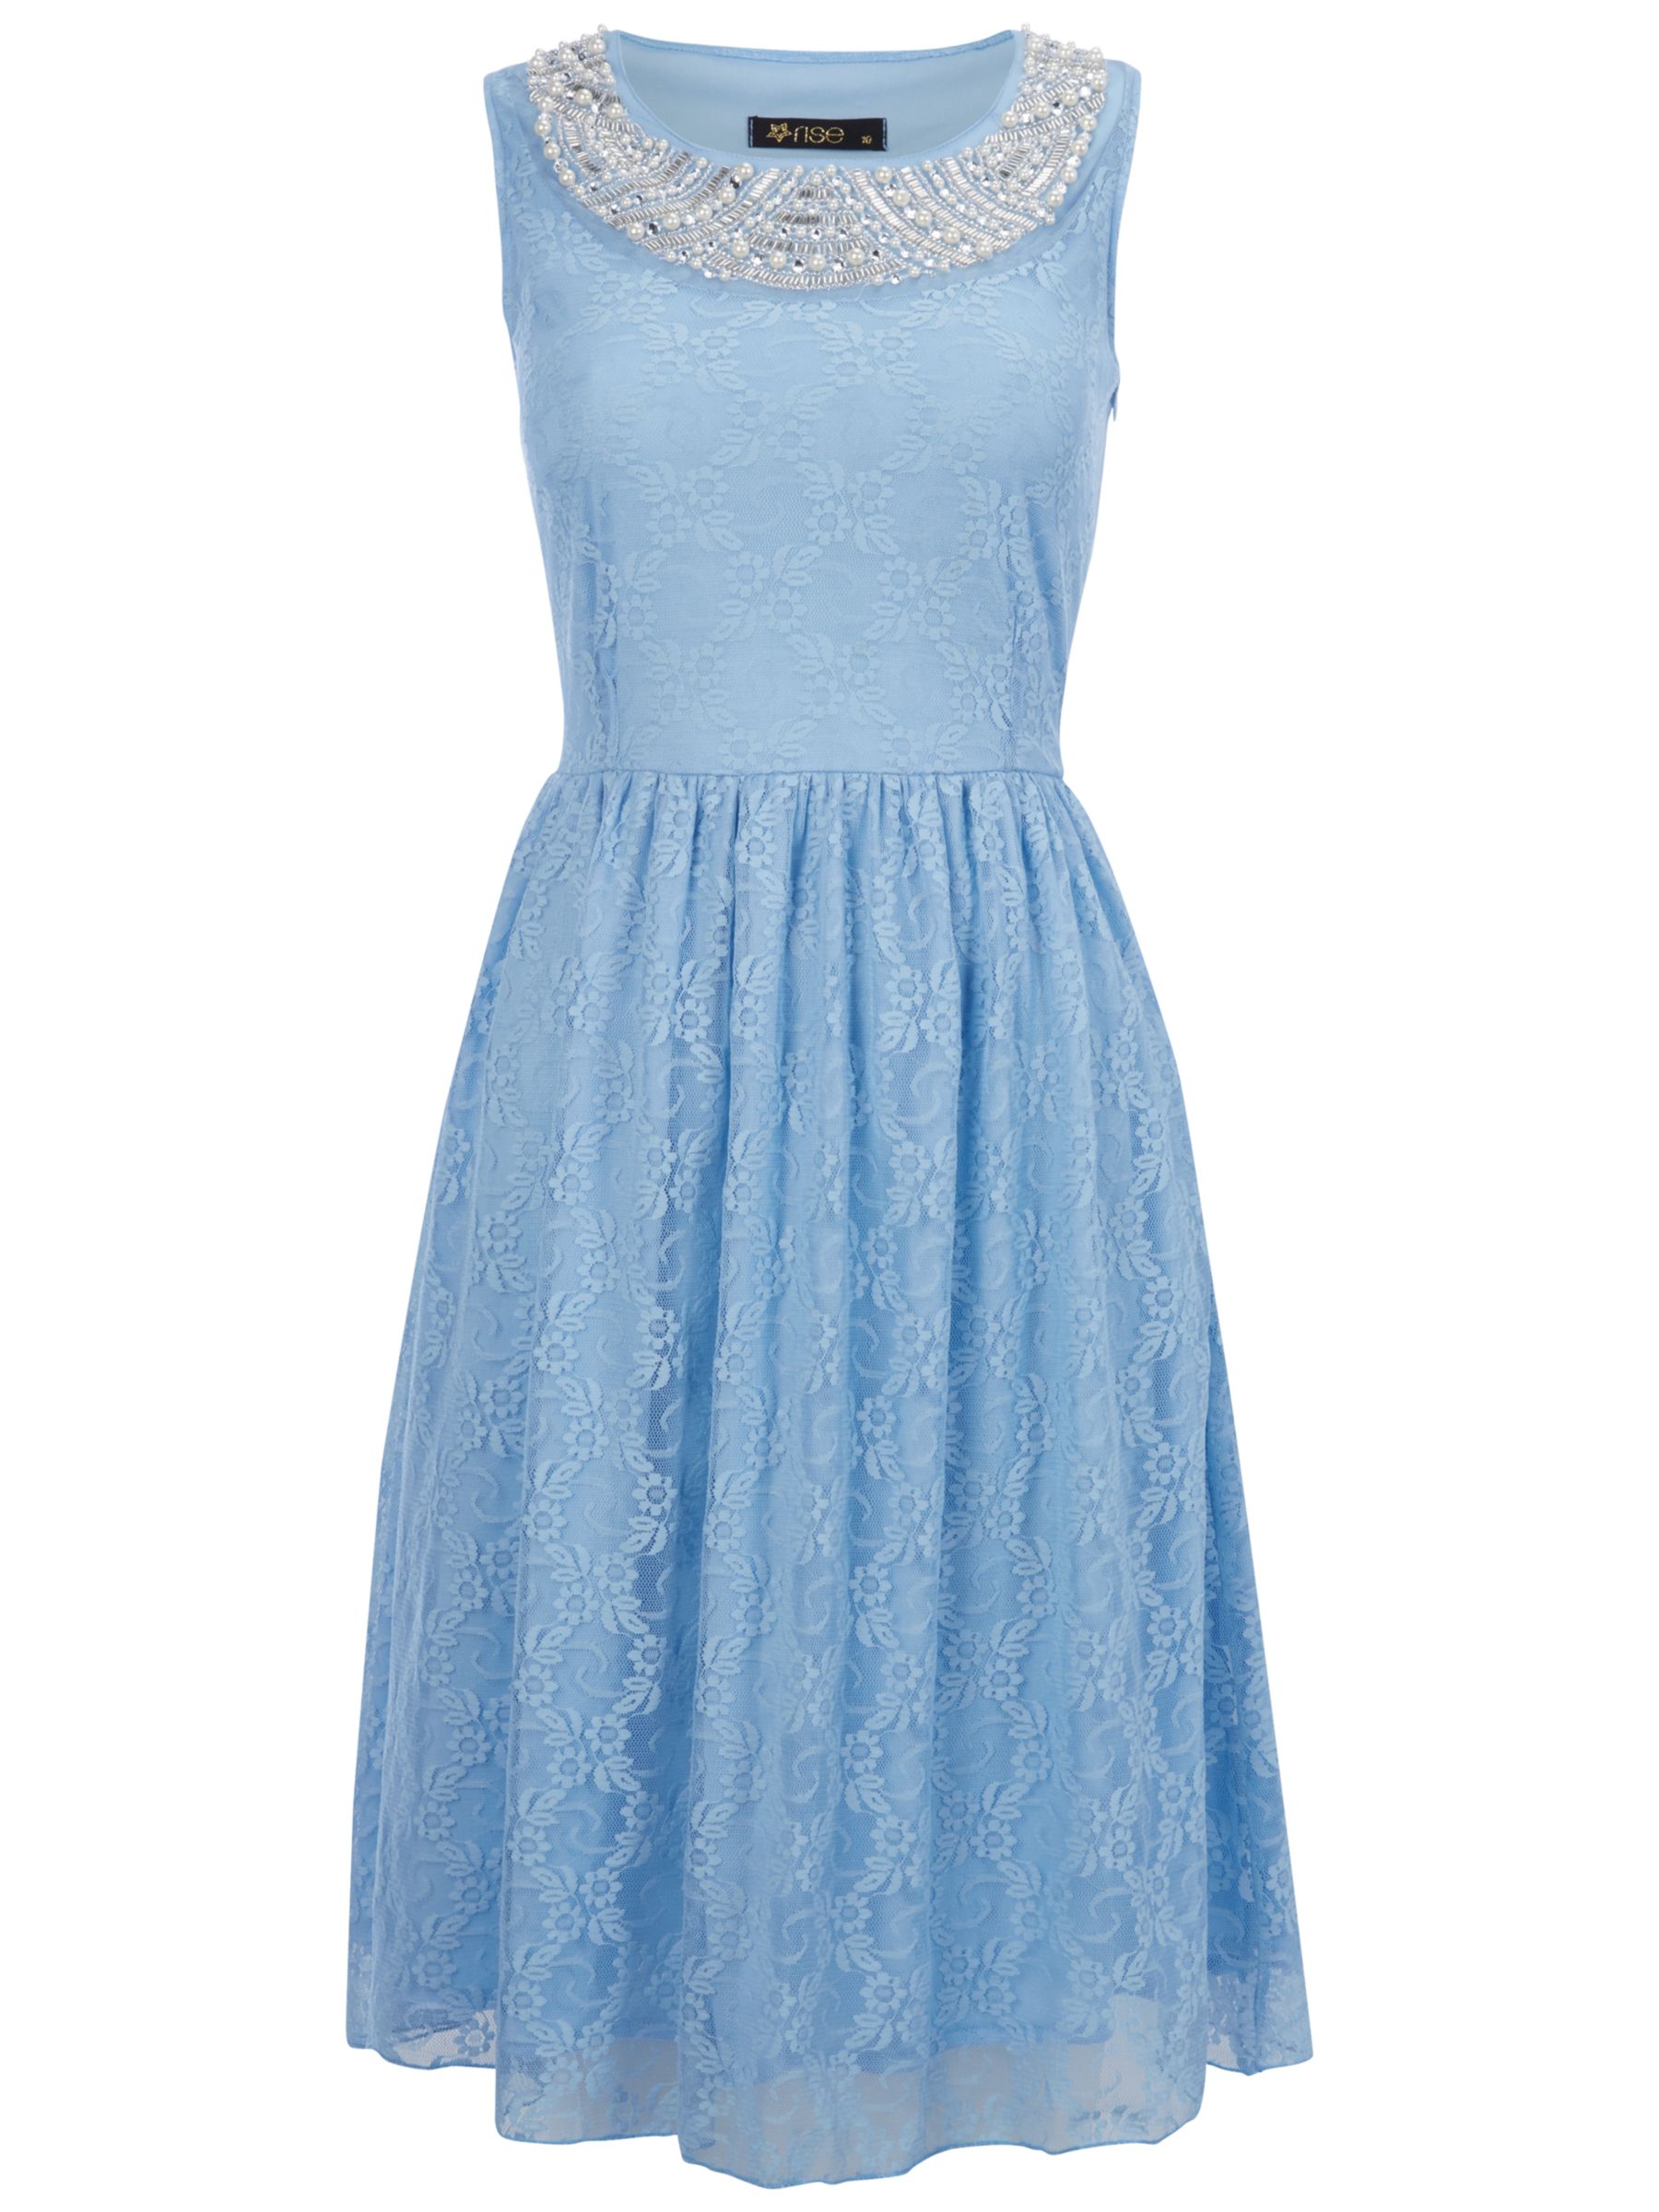 Rise Judy Pearl Trim Lace Dress, Pale Blue at John Lewis & Partners